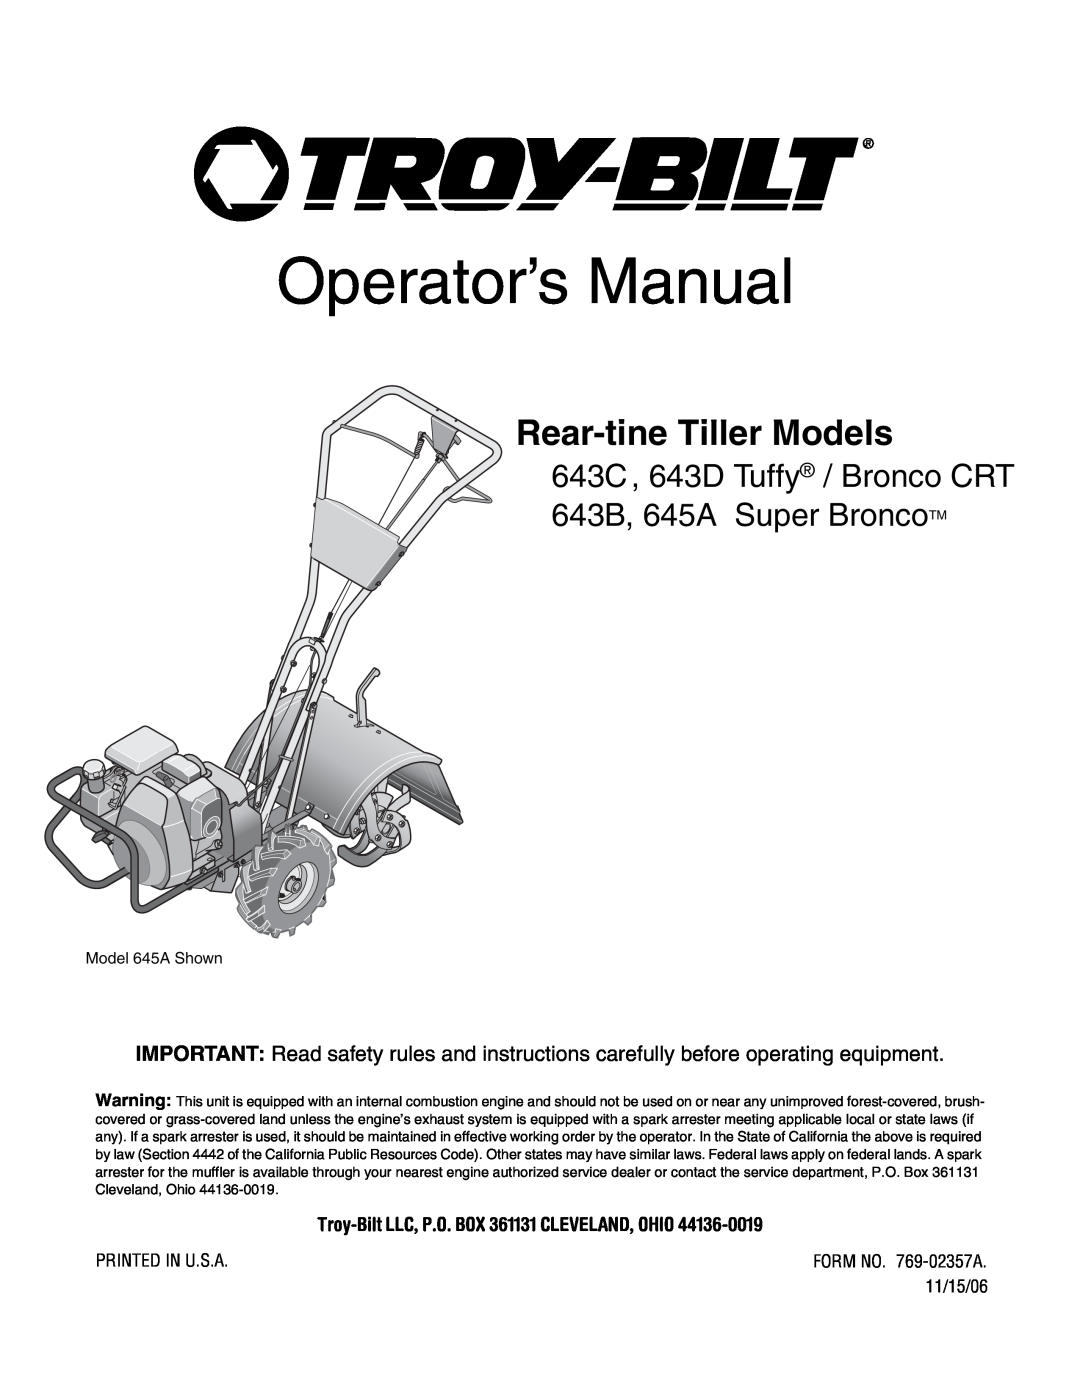 Troy-Bilt 643B Super Bronco manual Operator’s Manual, Rear-tine Tiller Models 